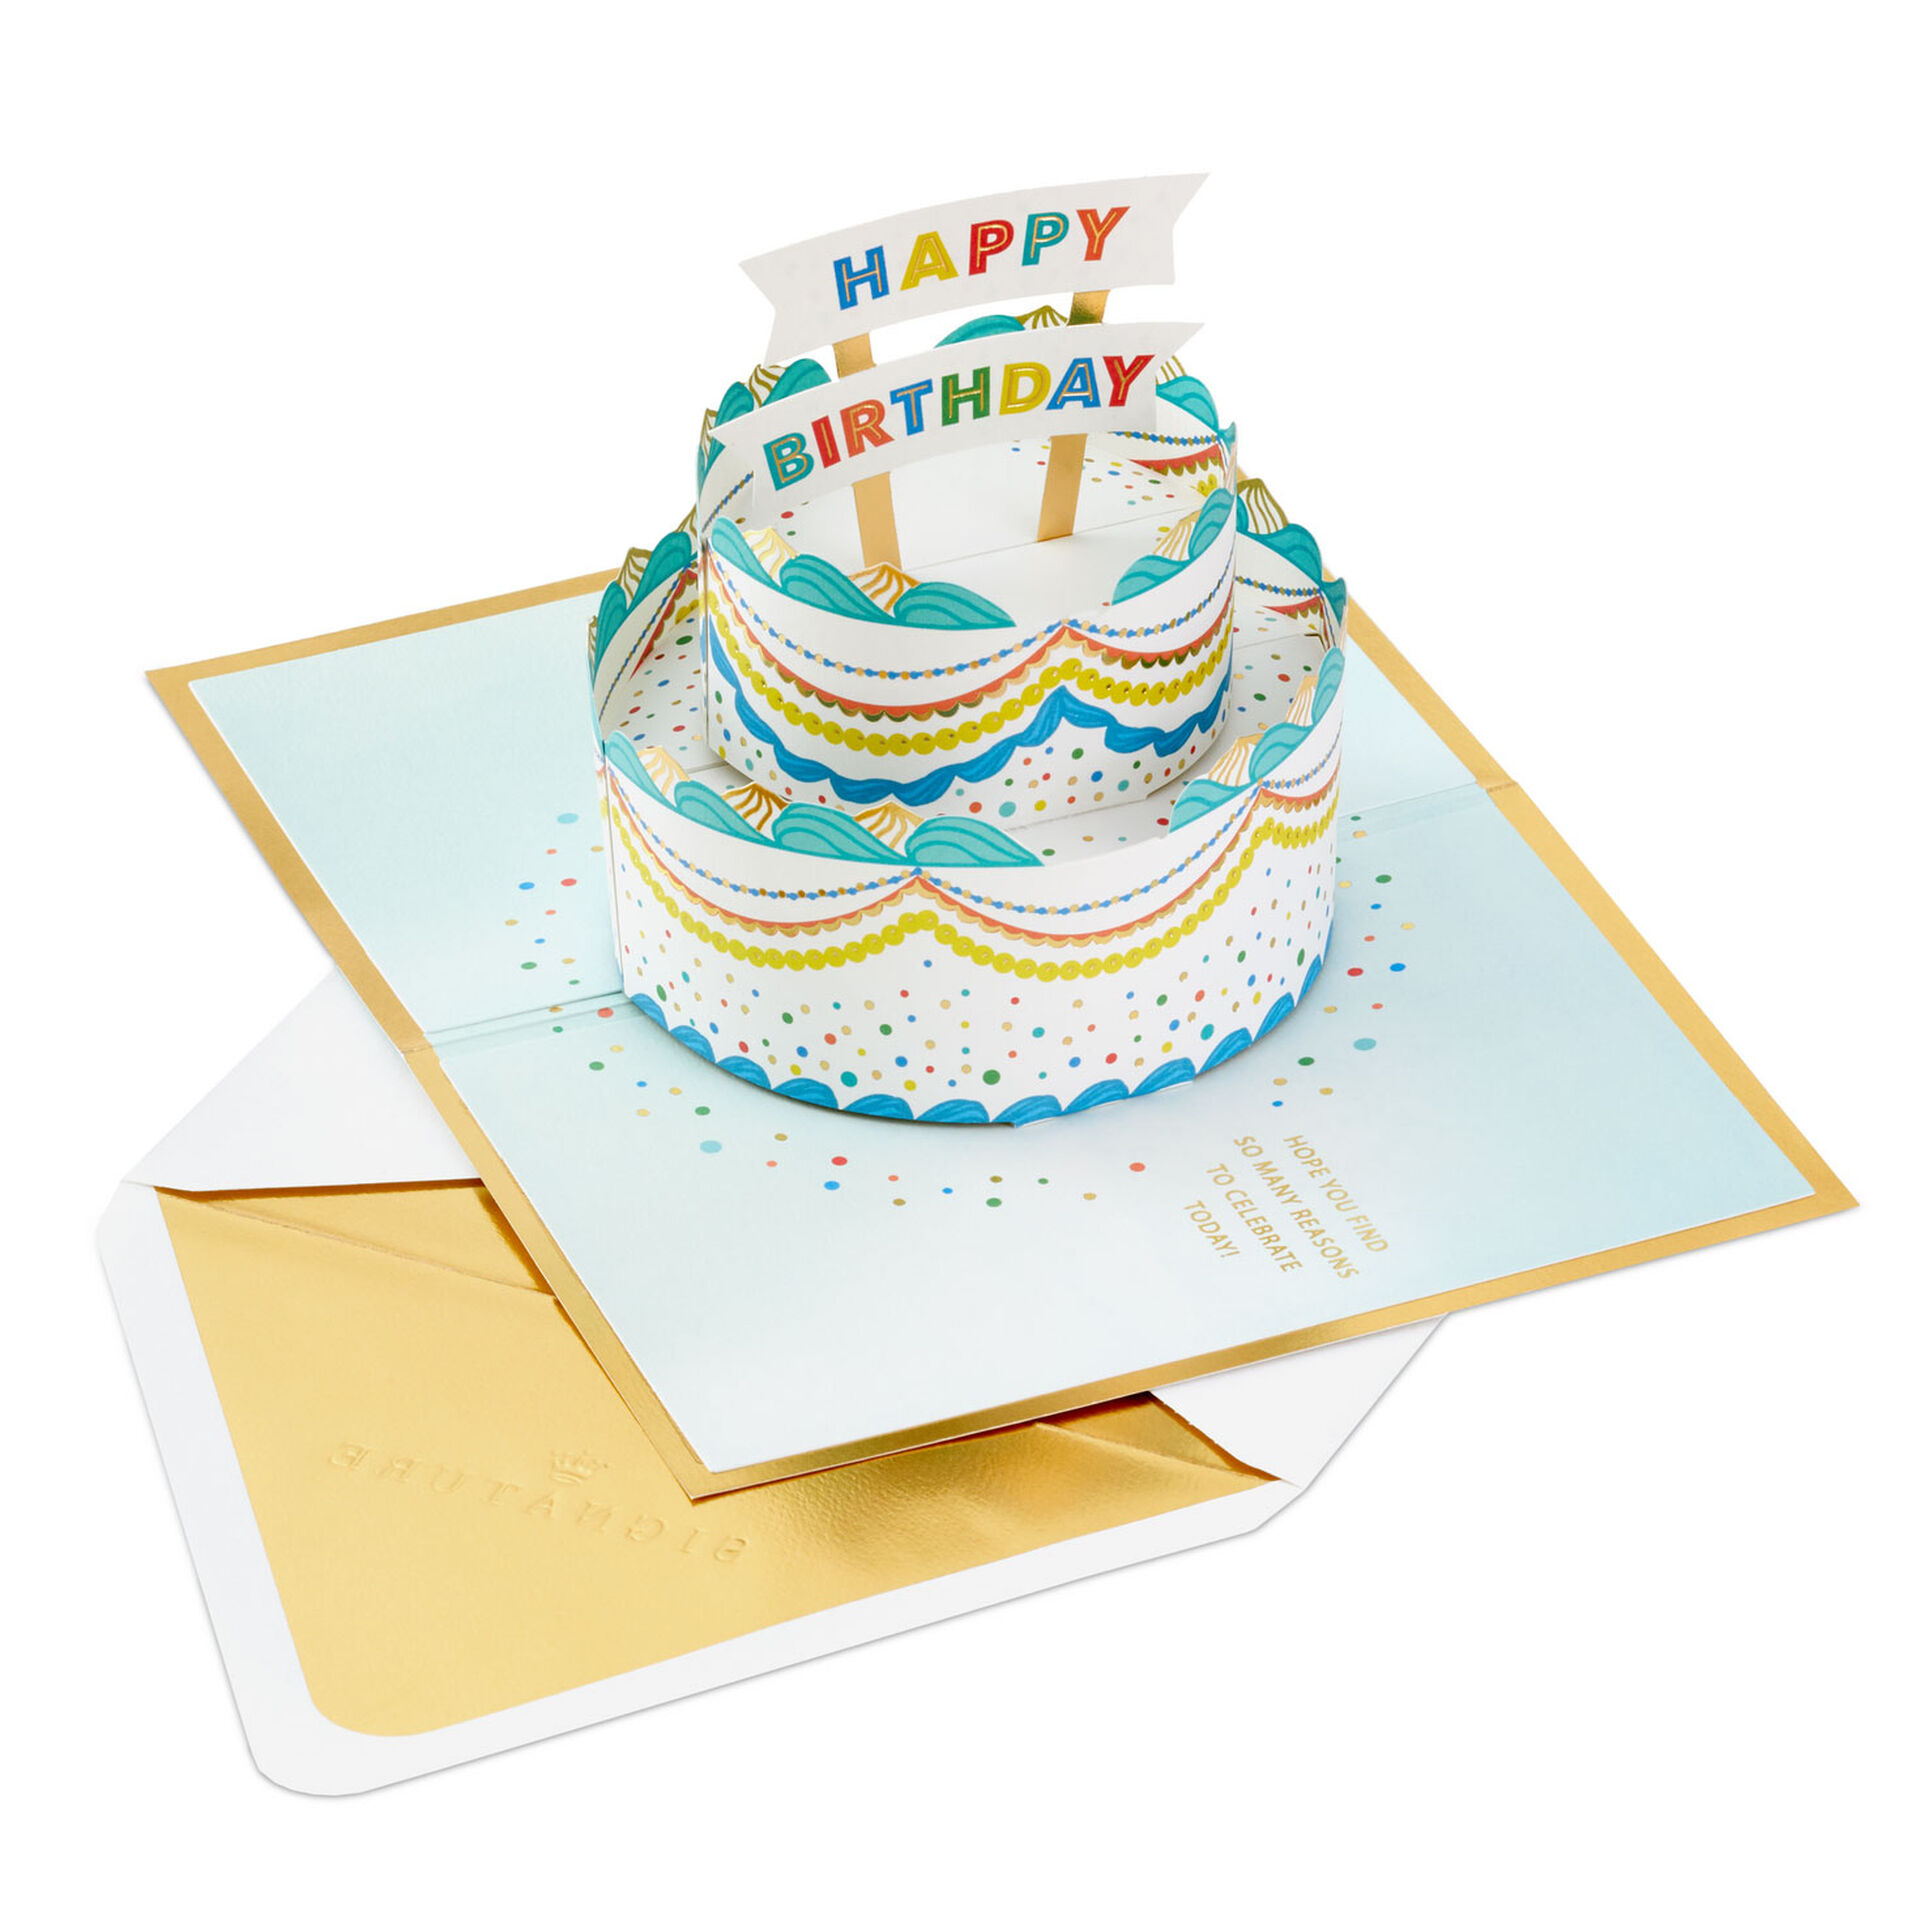 Birthday-Cake-3D-PopUp-Birthday-Card_1299LAD2895_02